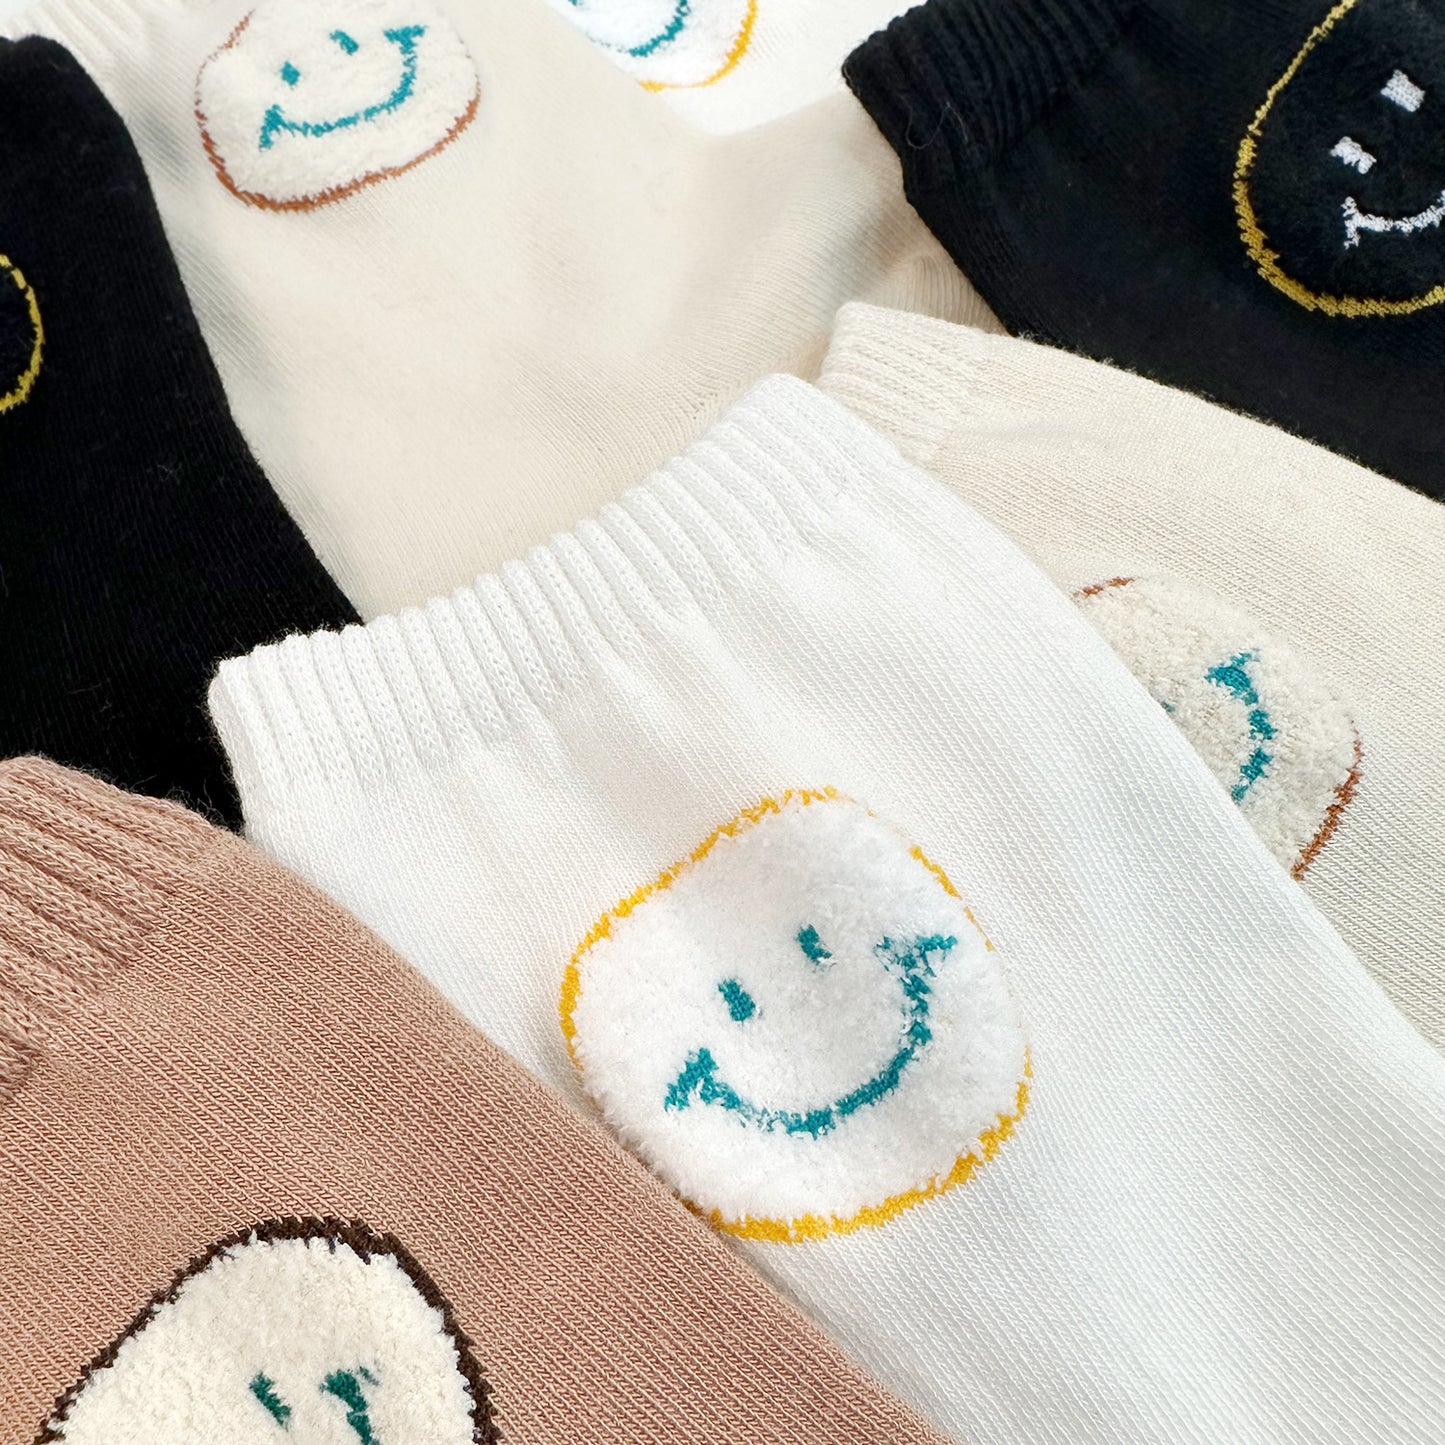 Women's Crew Pop-Up Smile Socks